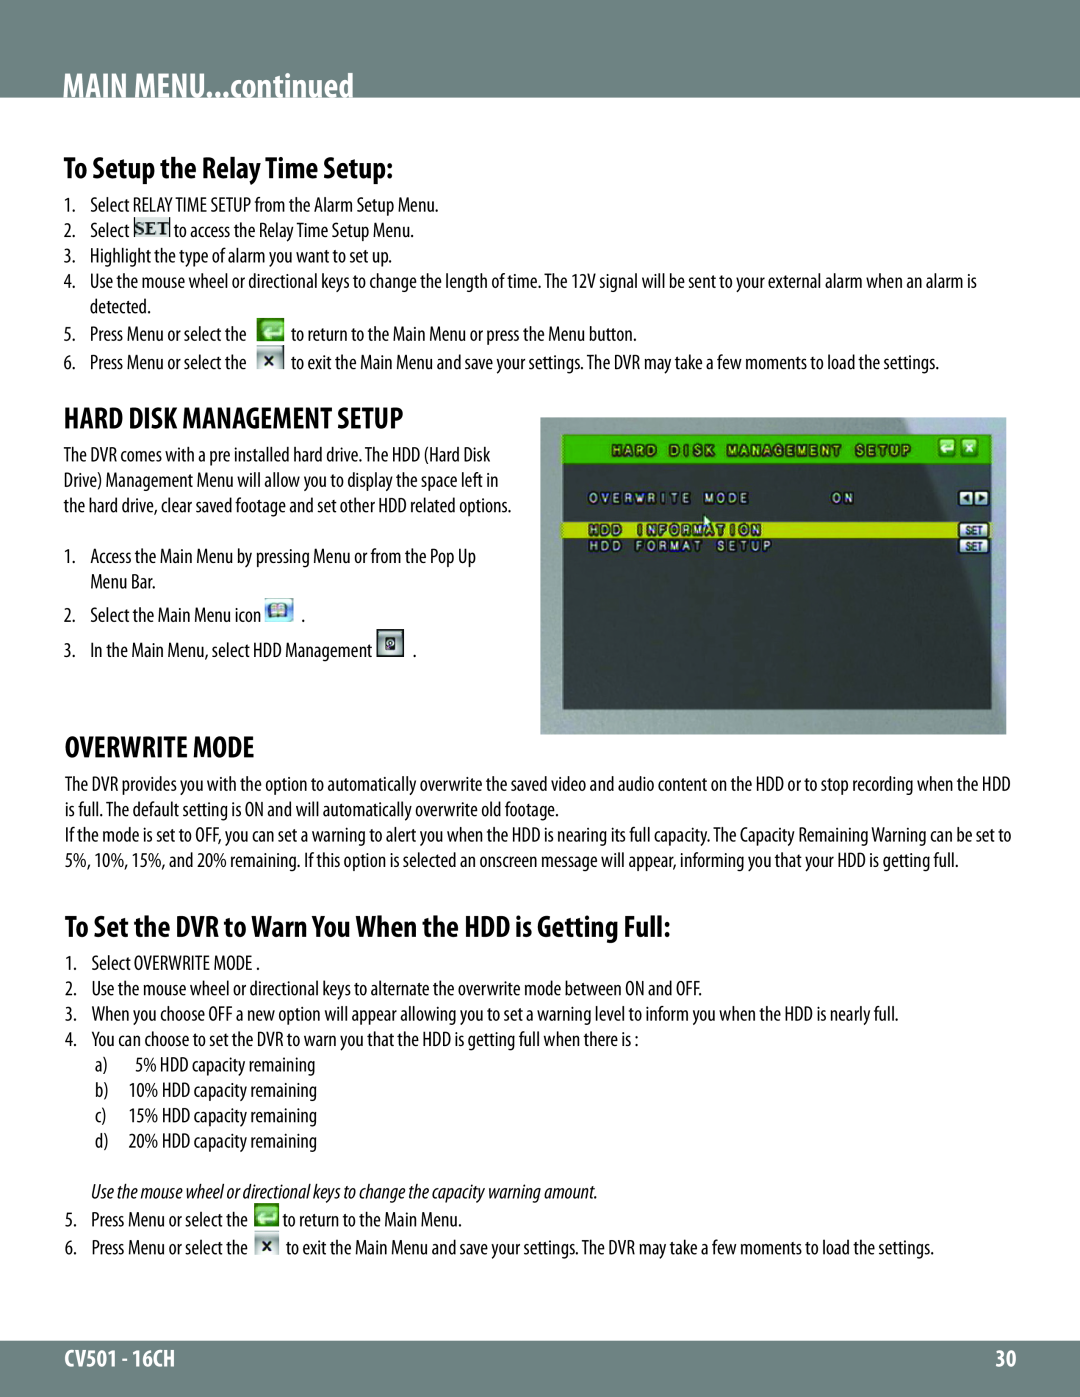 SVAT Electronics CV501 - 16CH instruction manual To Setup the Relay Time Setup, Hard Disk Management Setup, Overwrite Mode 